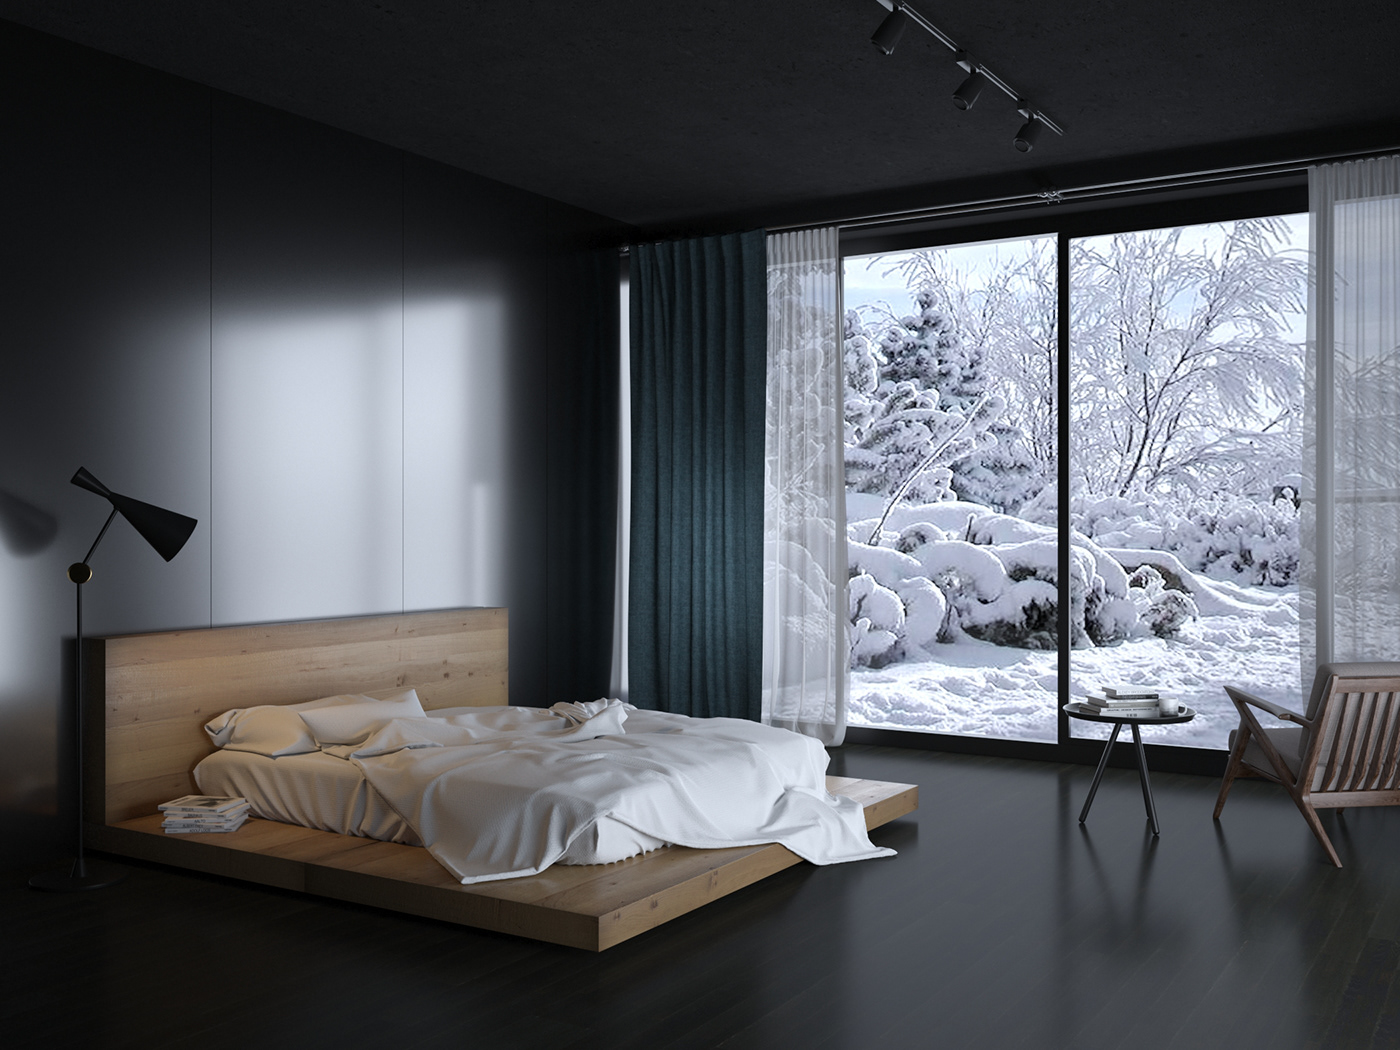 3dmodel 3drender 3dvisualisation bedroomdesign lessismore minimaldesign Minimalism vray3dsmax vrayrender VrayWorld